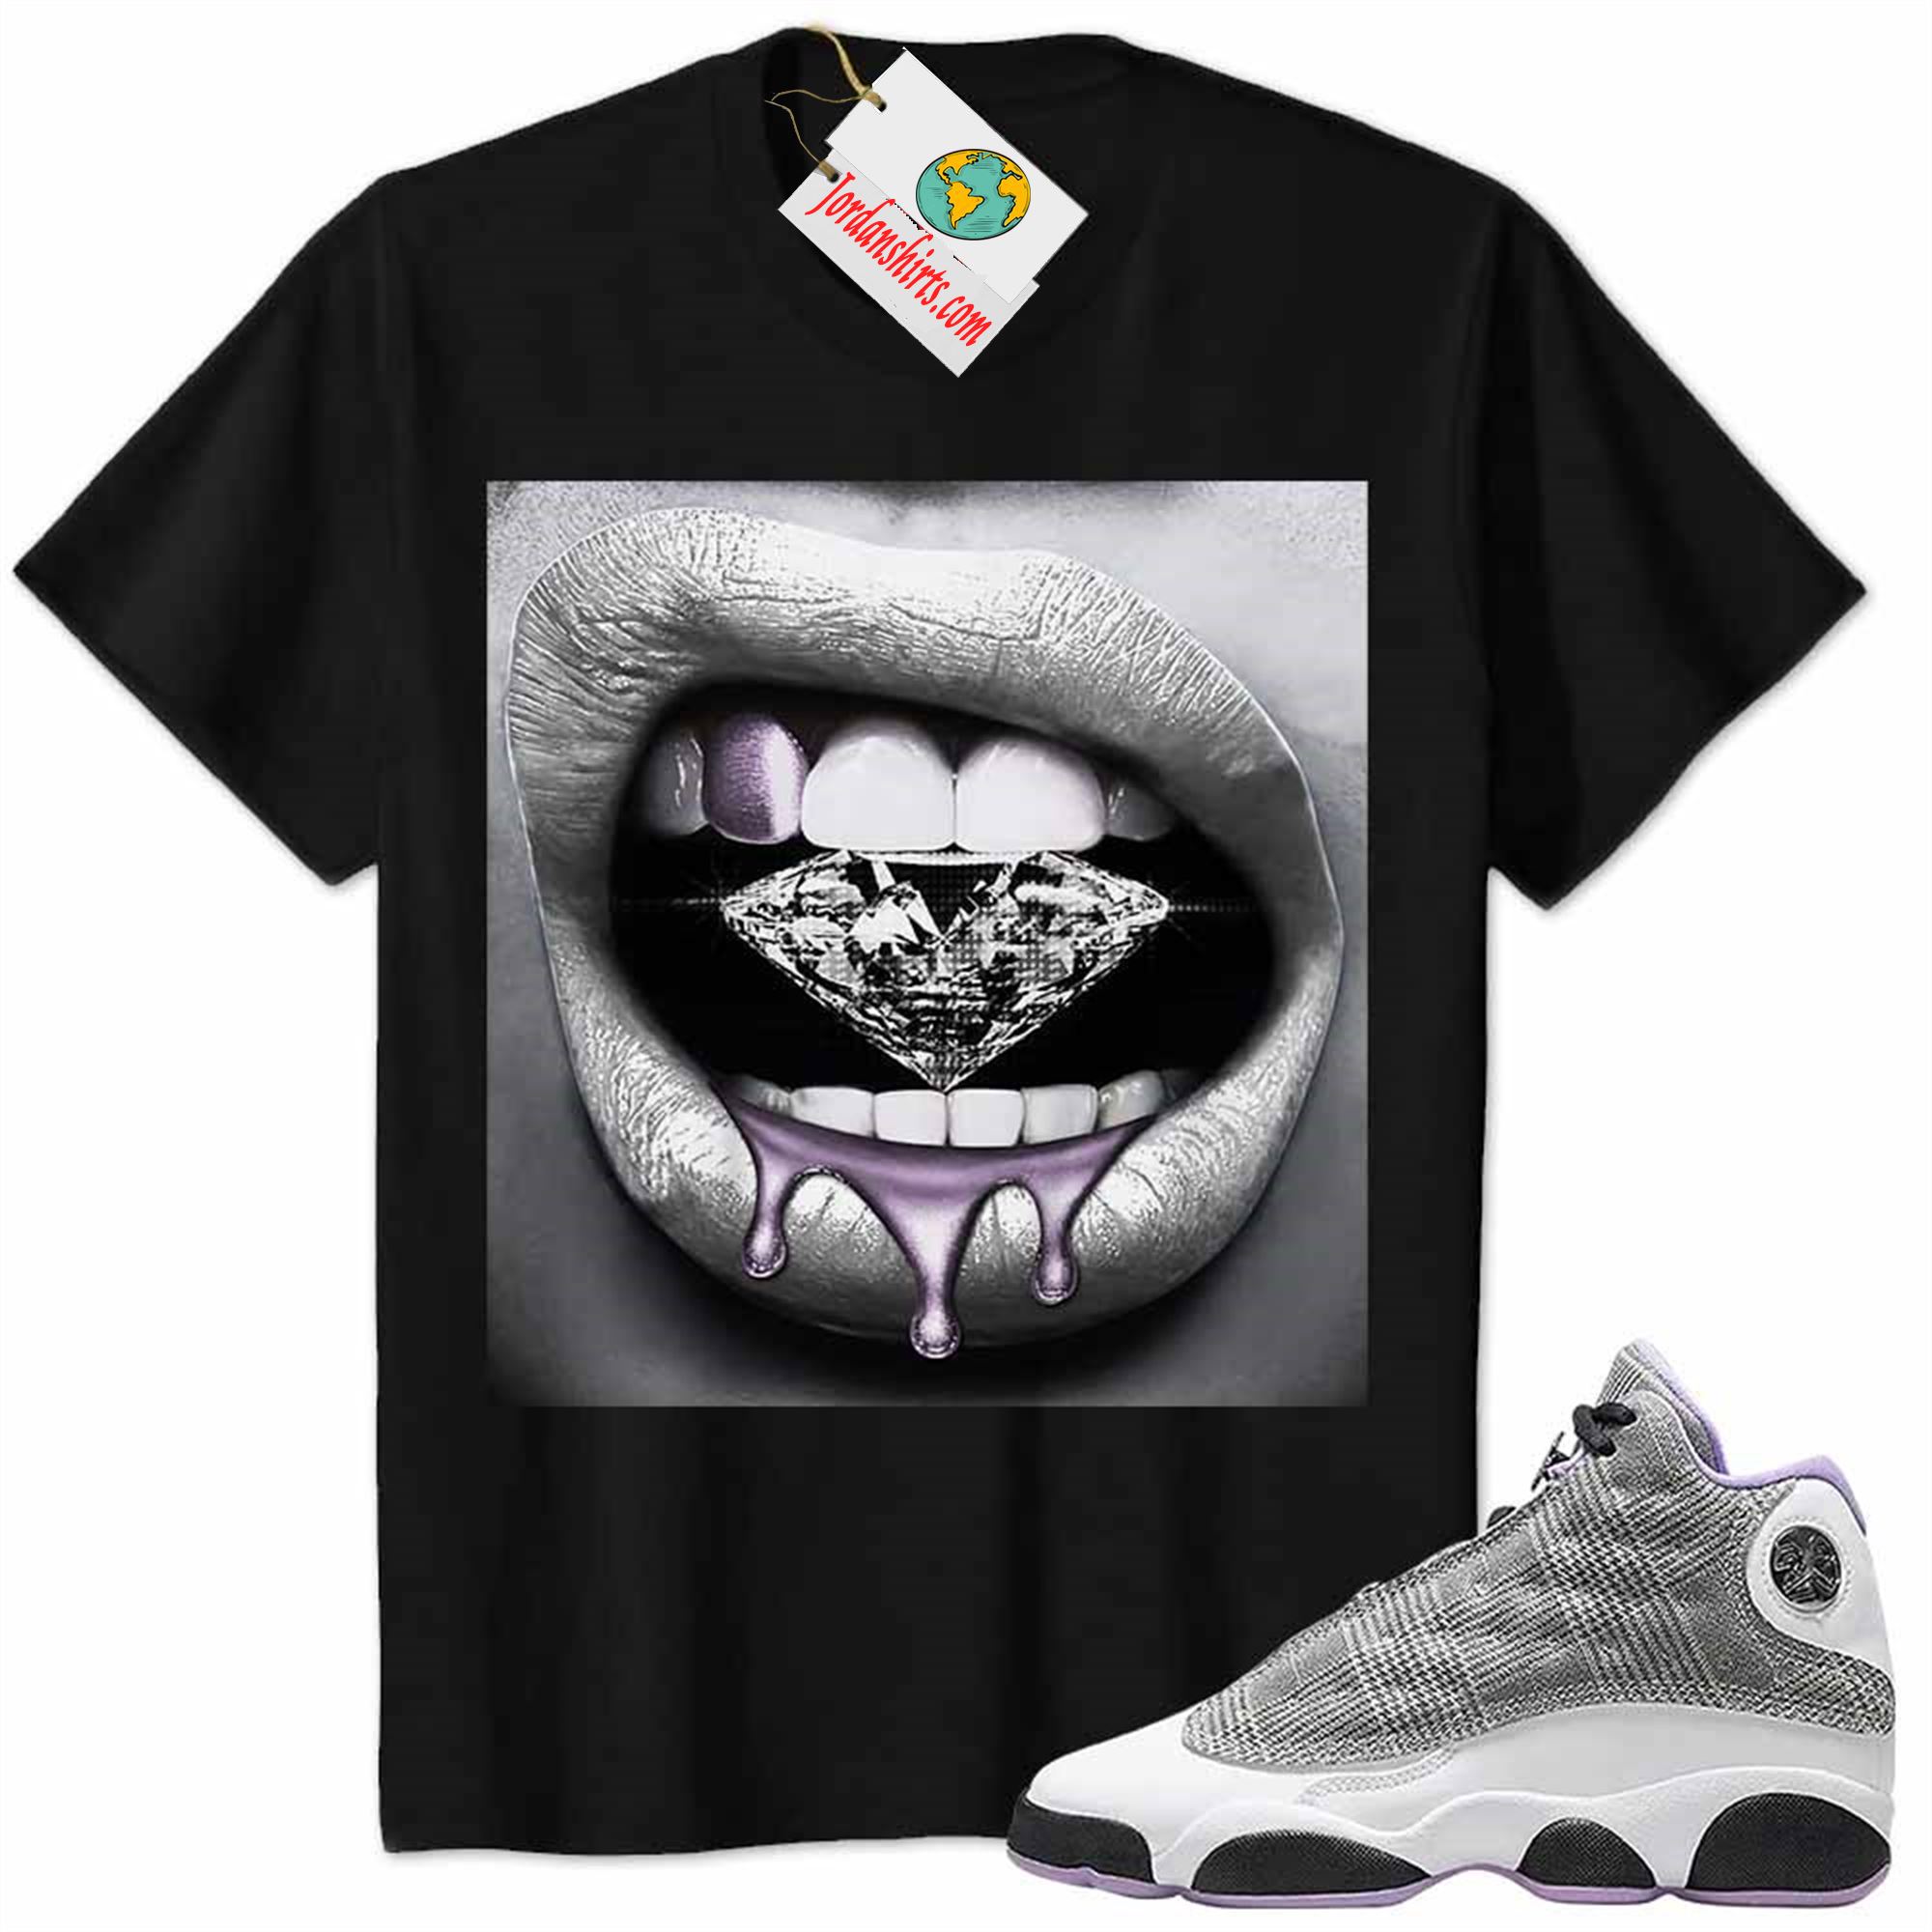 Jordan 13 Shirt, Jordan 13 Houndstooth Shirt Sexy Lip Bite Diamond Dripping Black Plus Size Up To 5xl